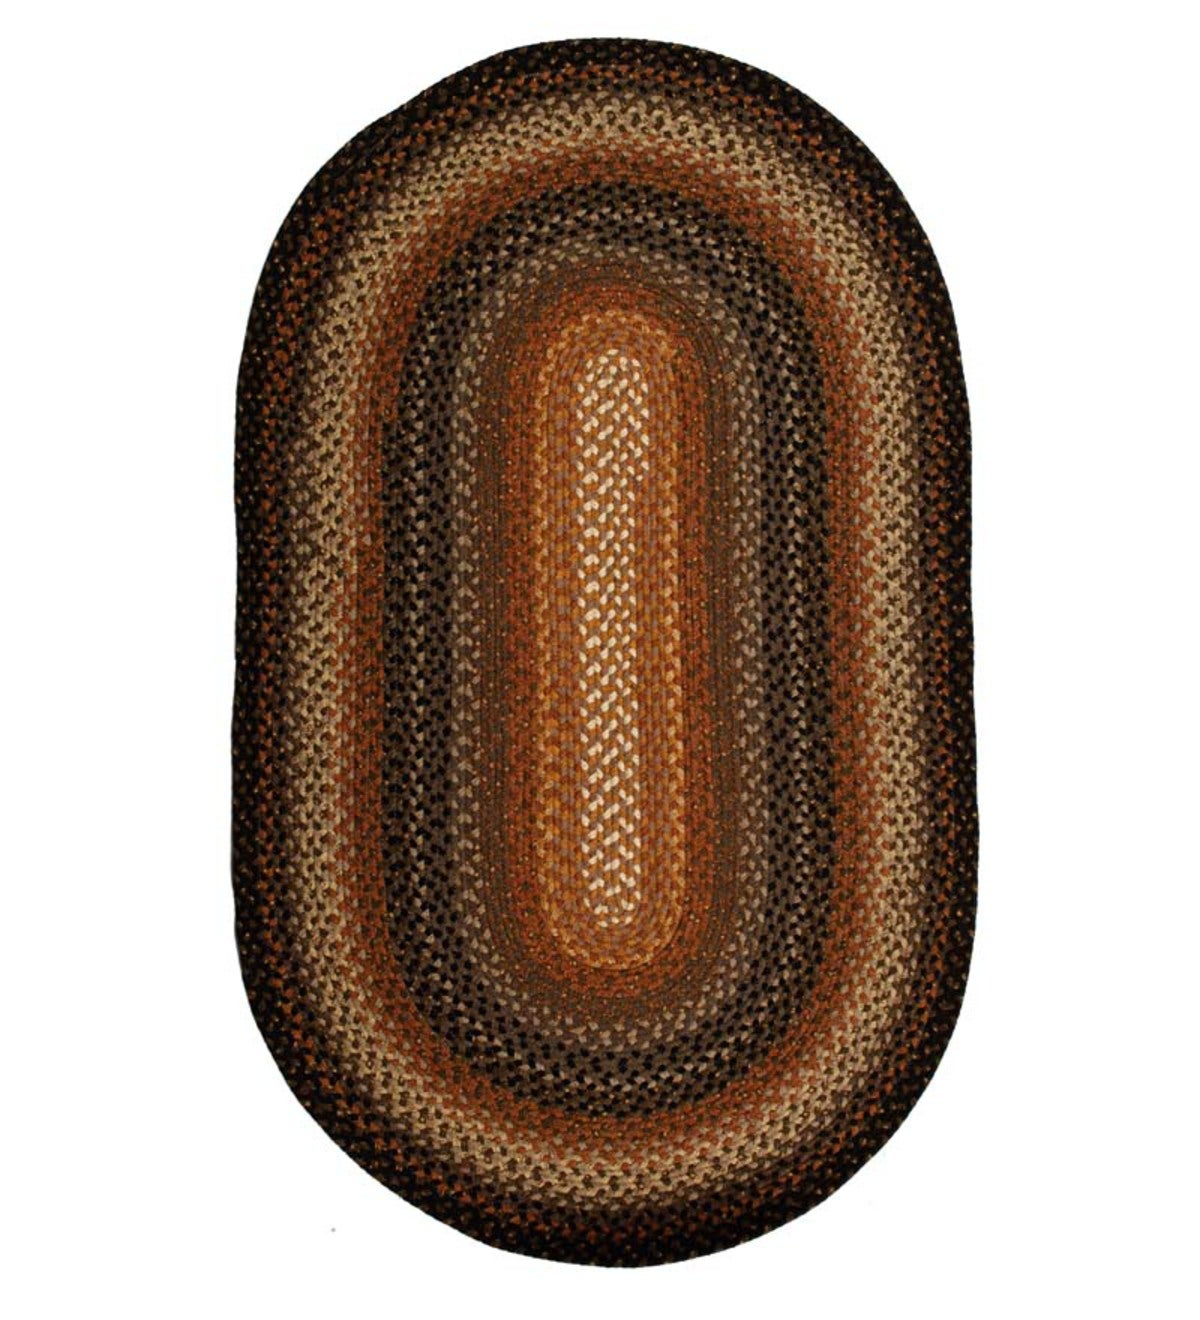 Oval Cotton Blend Braided Rug, 8' x 10' - Cocoa Bean